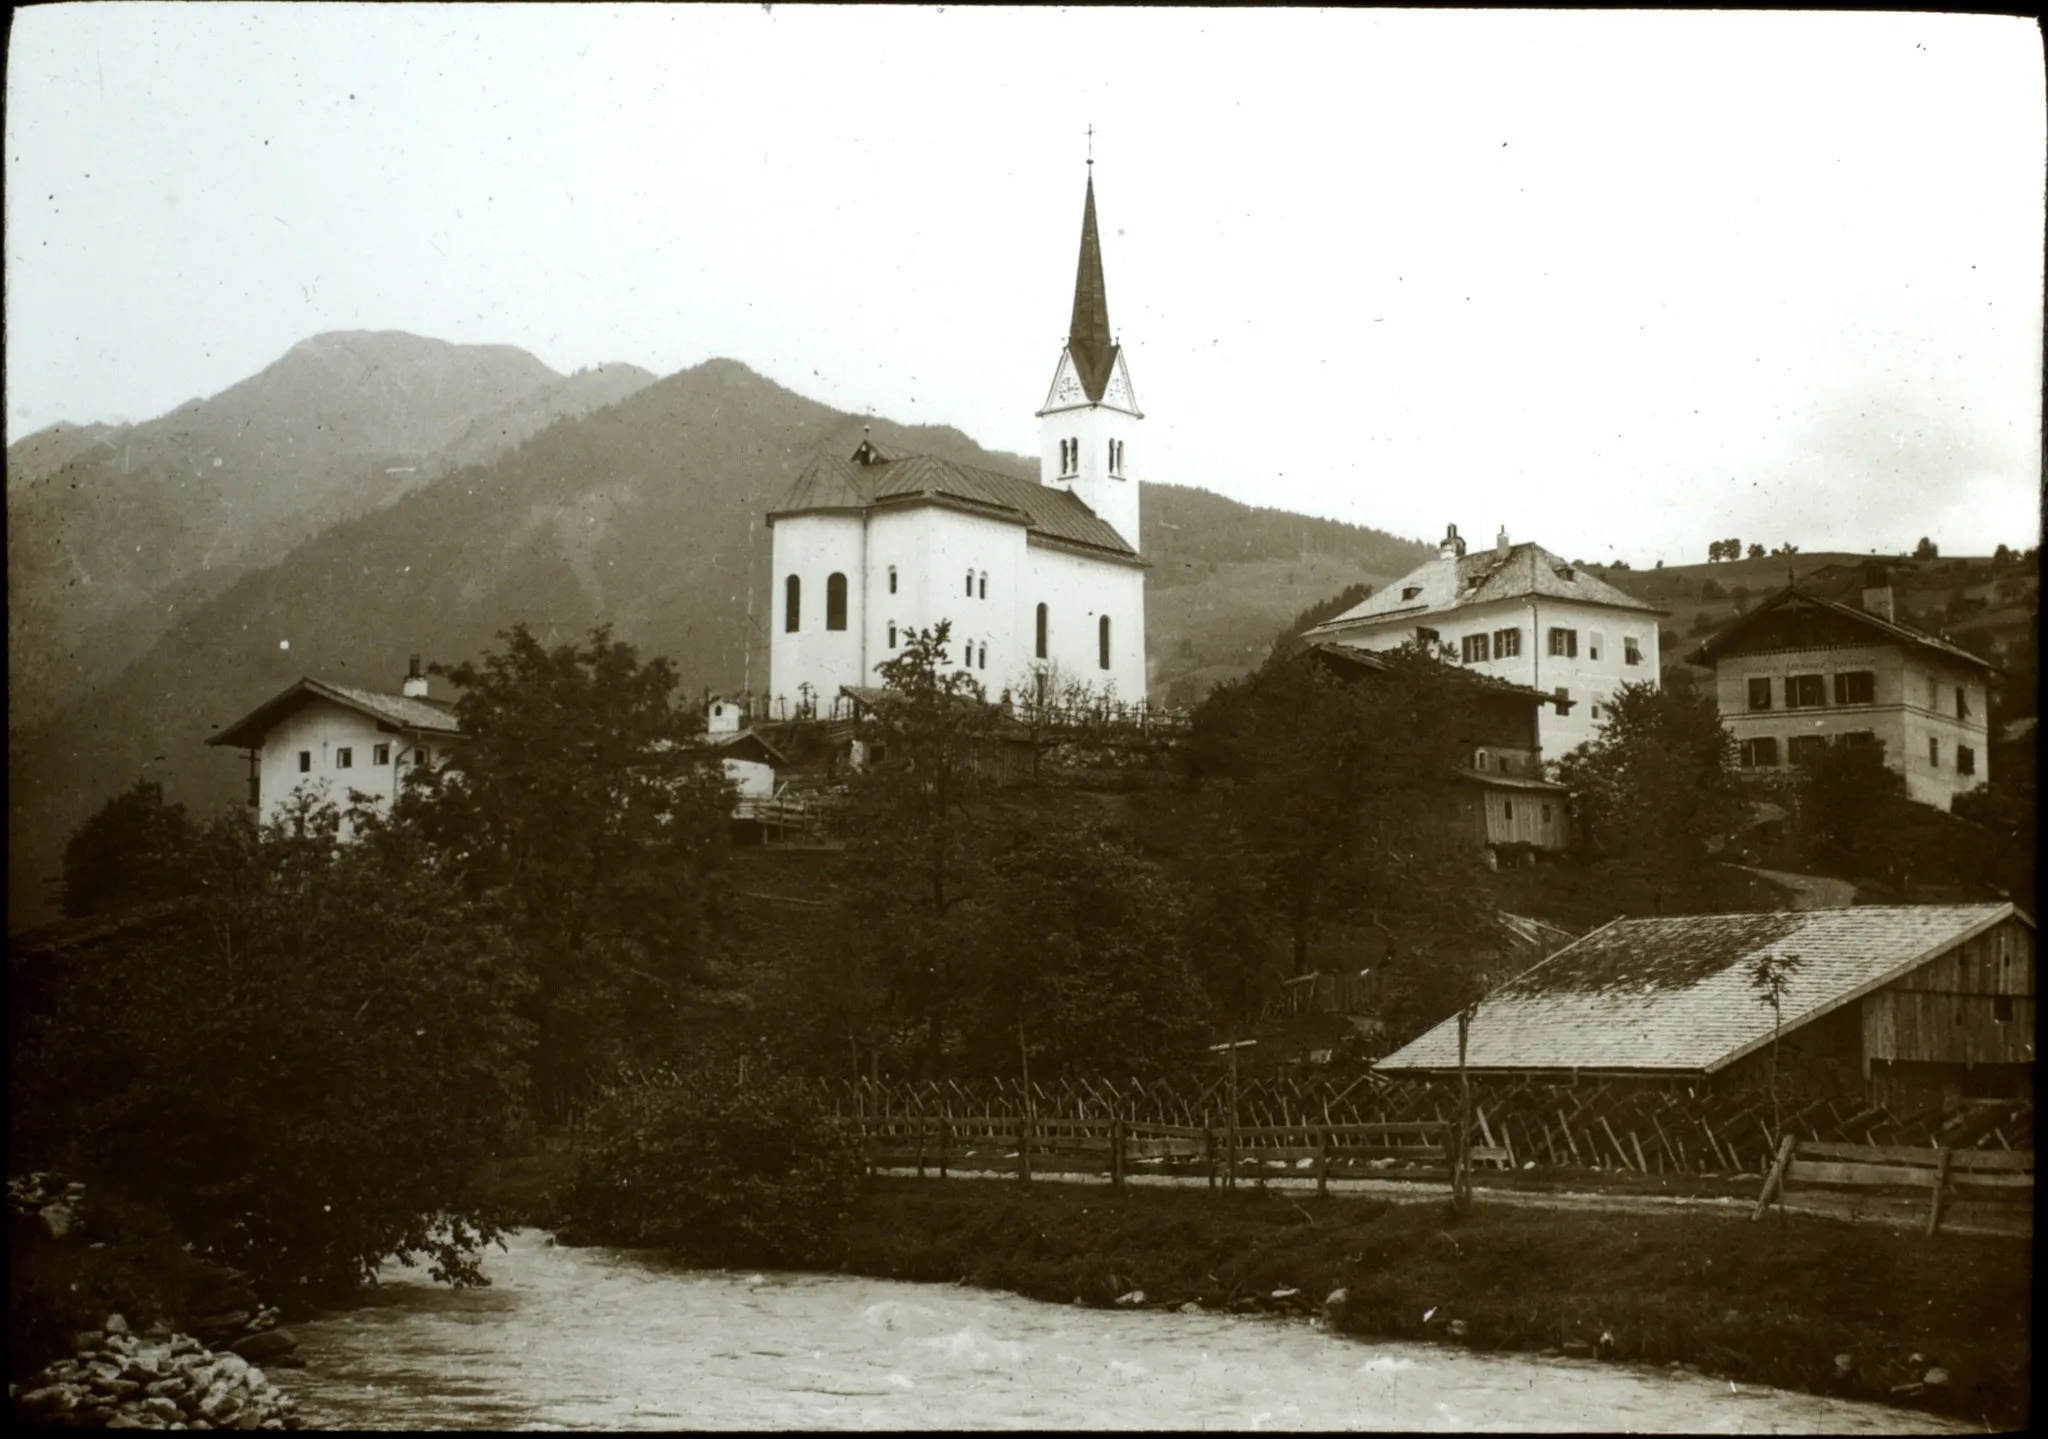 Photo showing: Juli 1903 - Kath. Pfarrkirche hl. Margarethe. Photo A.E.Hasse, Baildon, Yorks. 6x6 glass platte diapositiv